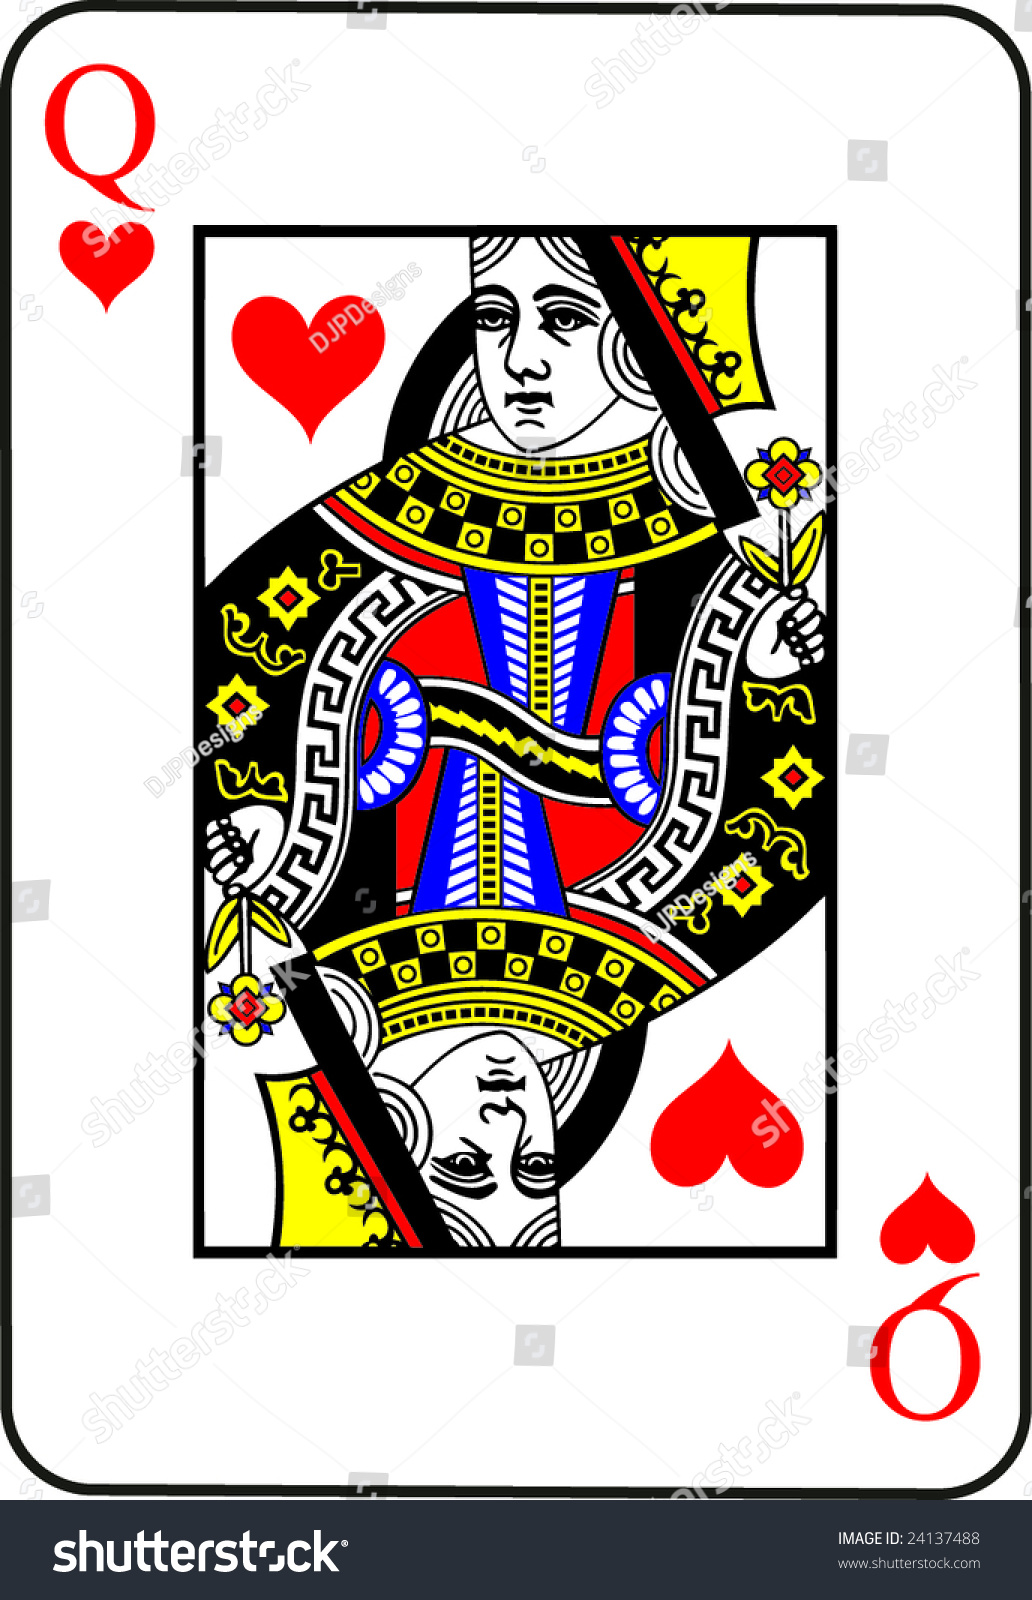 Queen Of Hearts Vector Illustration - 24137488 : Shutterstock